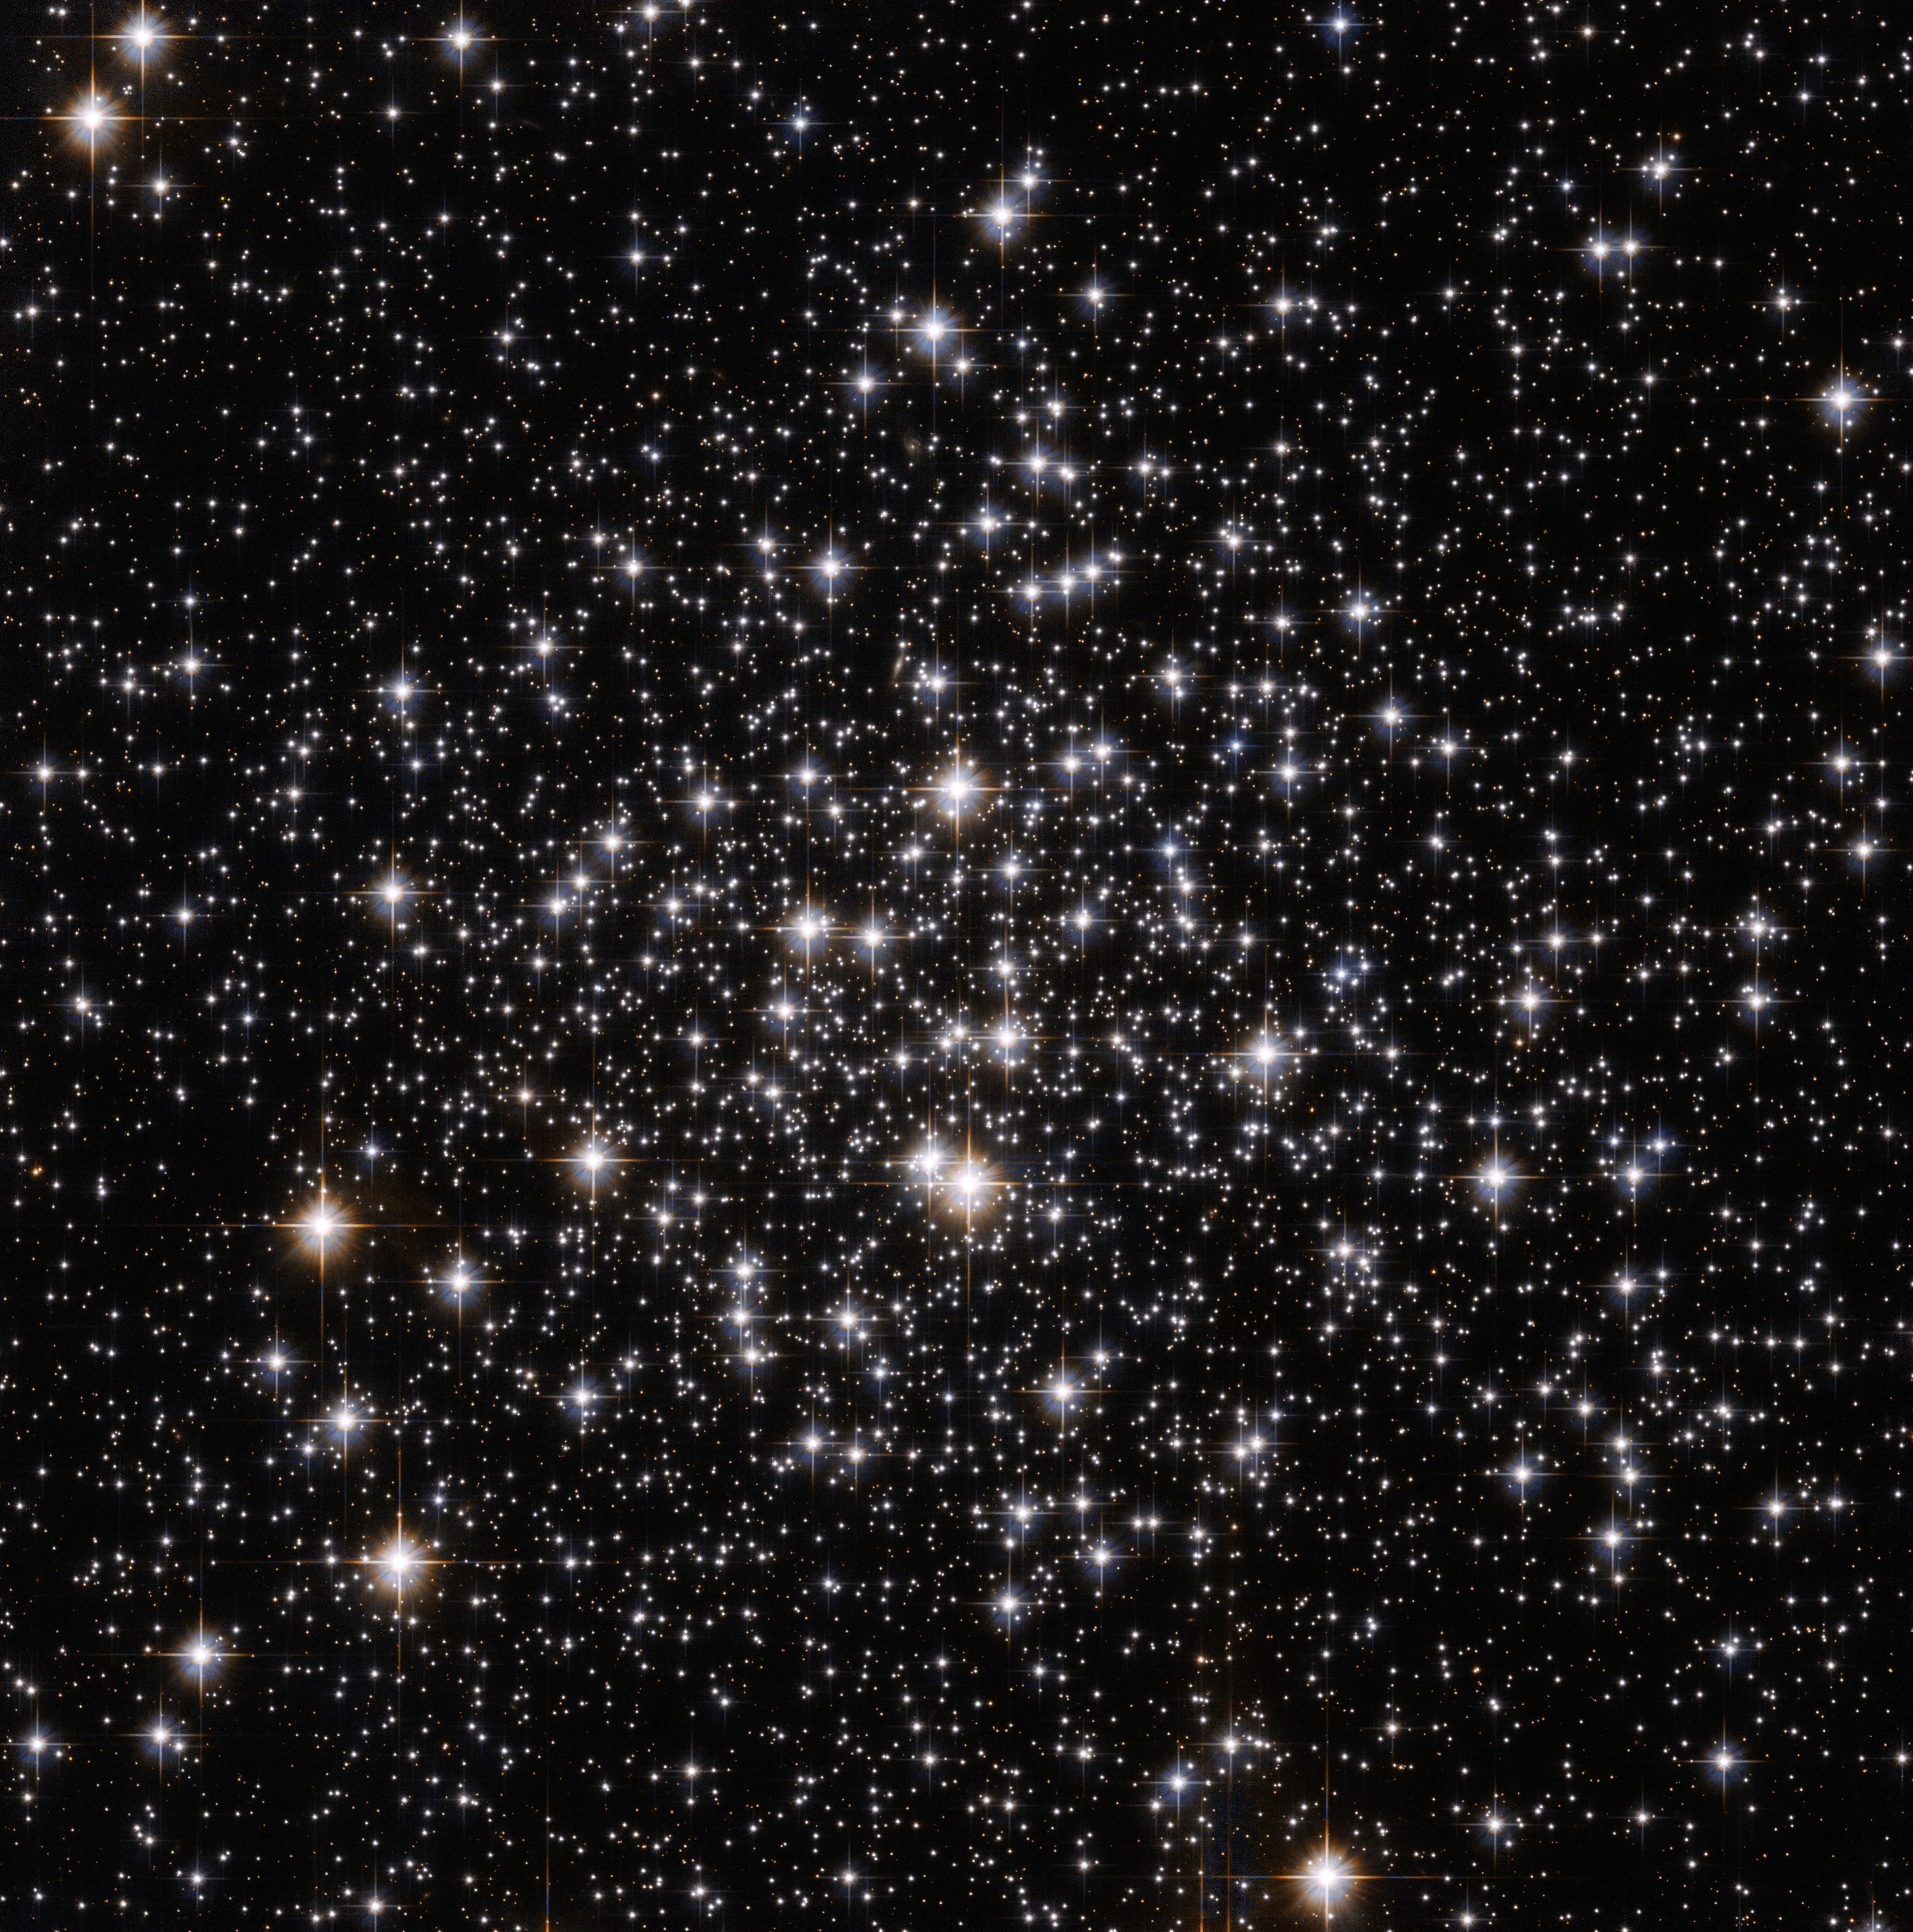 Several stars shine against black space.